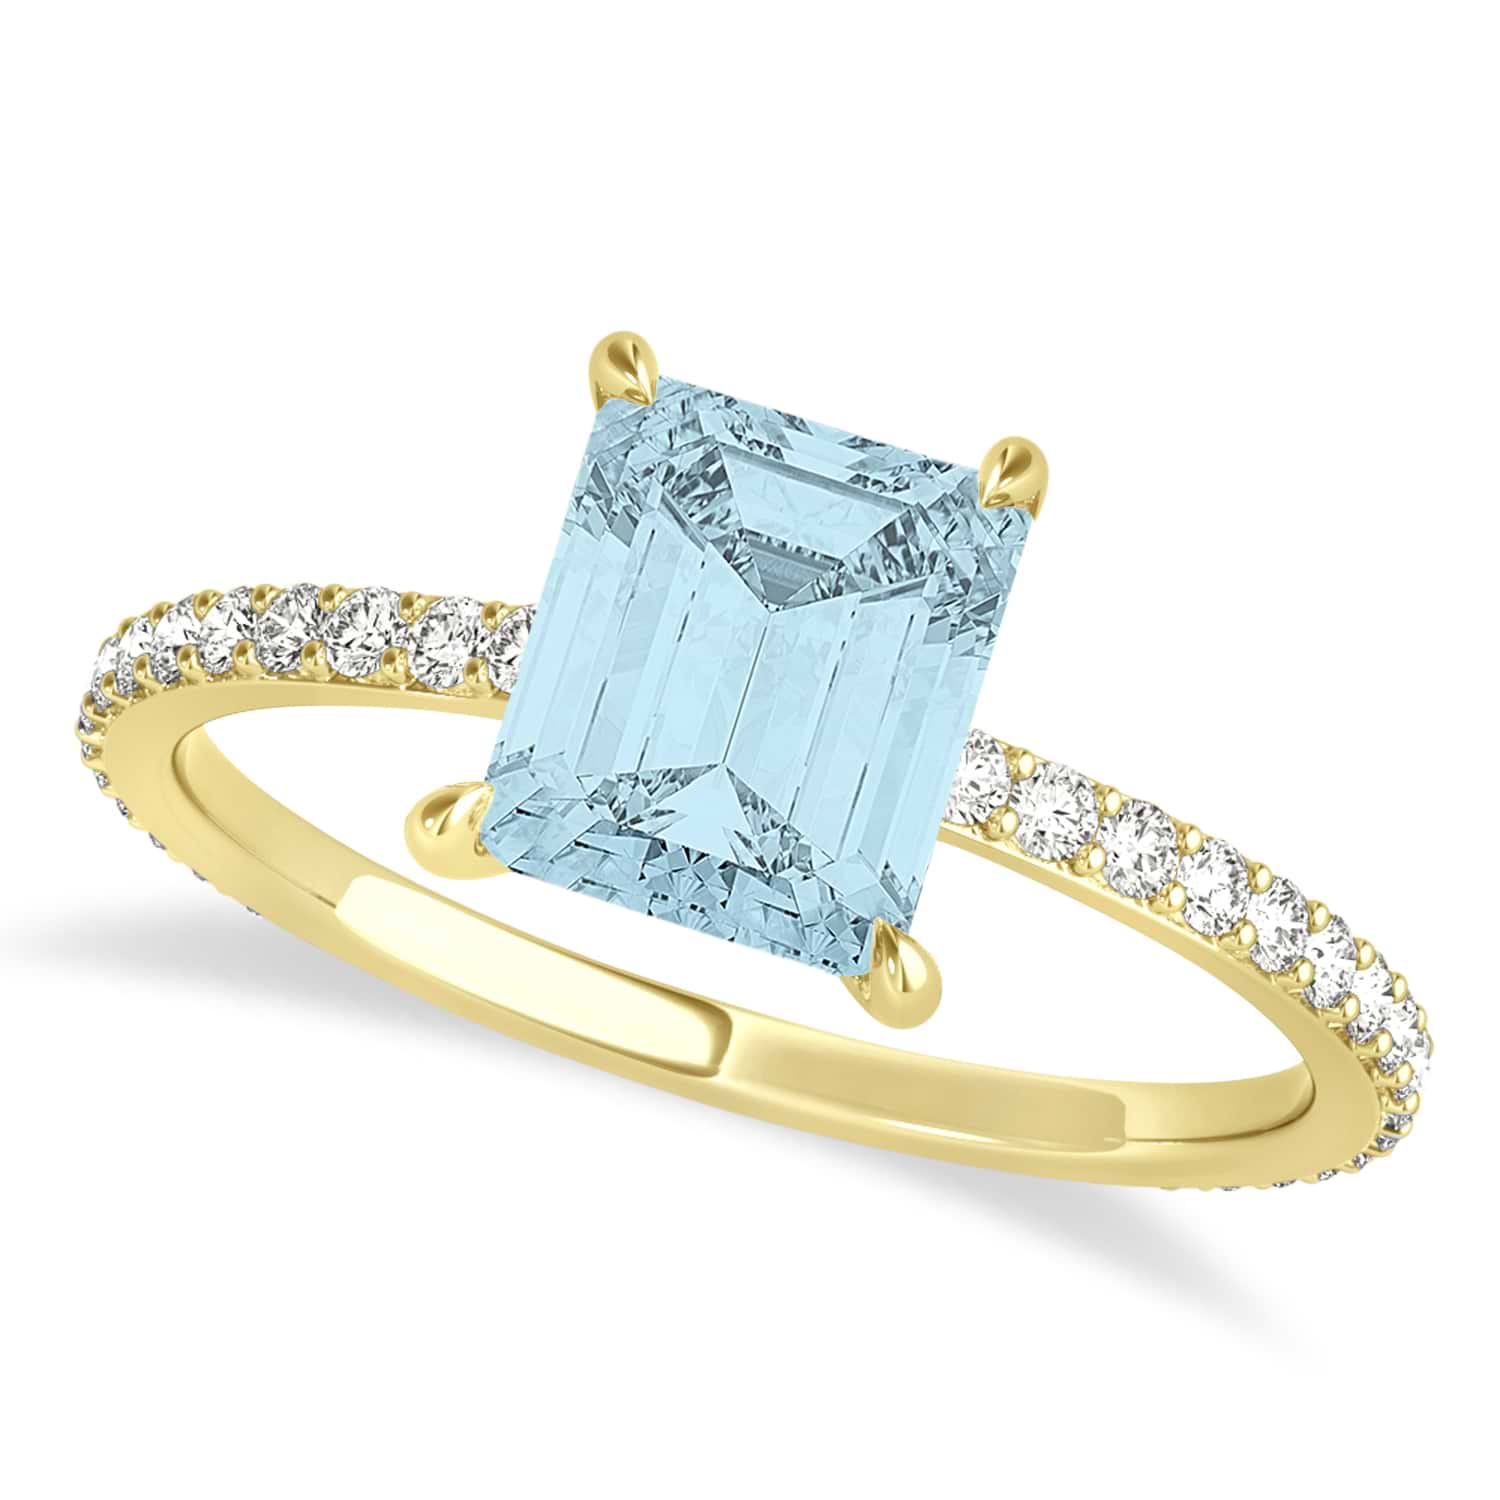 Emerald Aquamarine & Diamond Hidden Halo Engagement Ring 18k Yellow Gold (2.93ct)